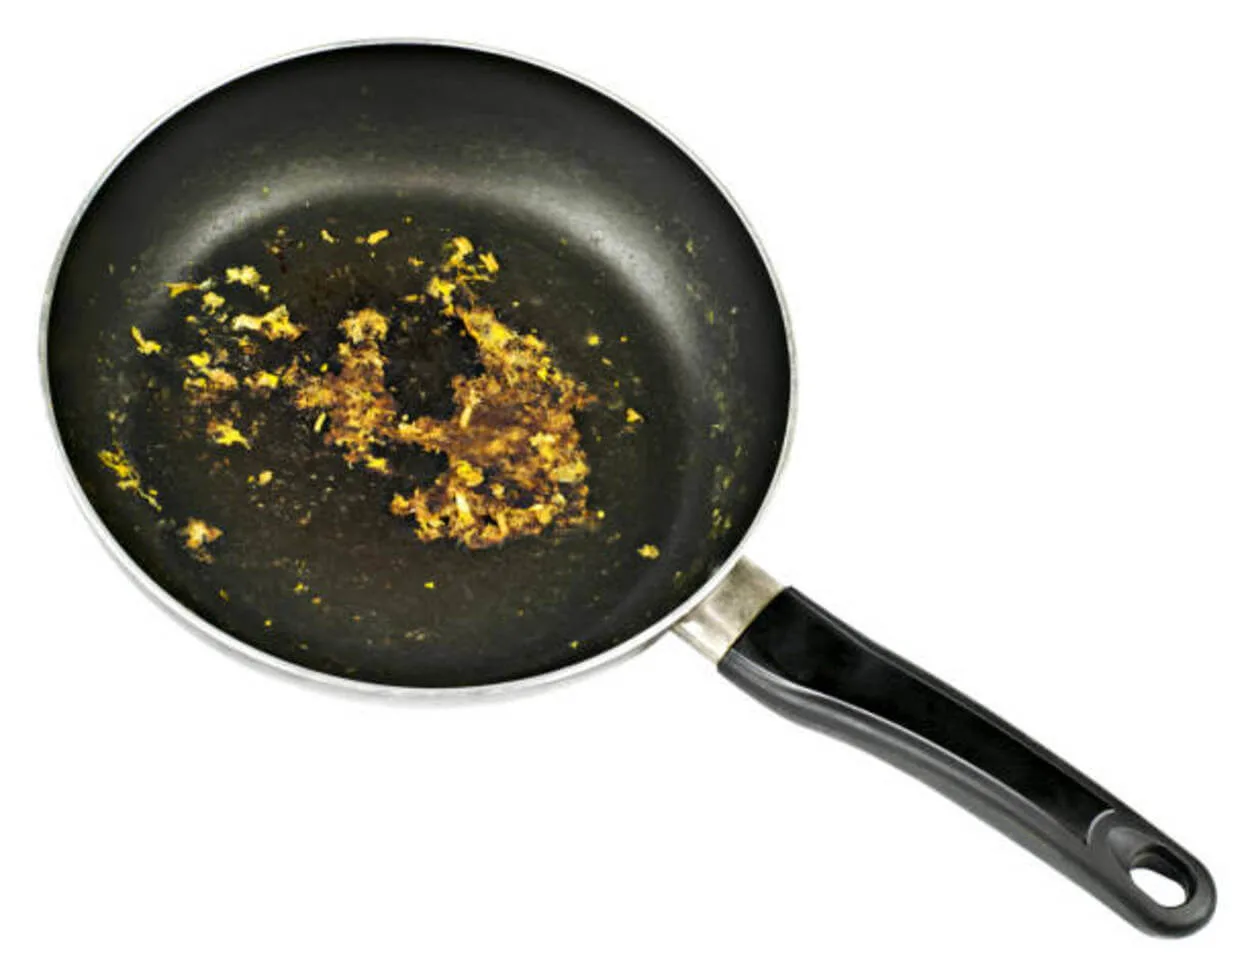 Food stuck in a frying pan